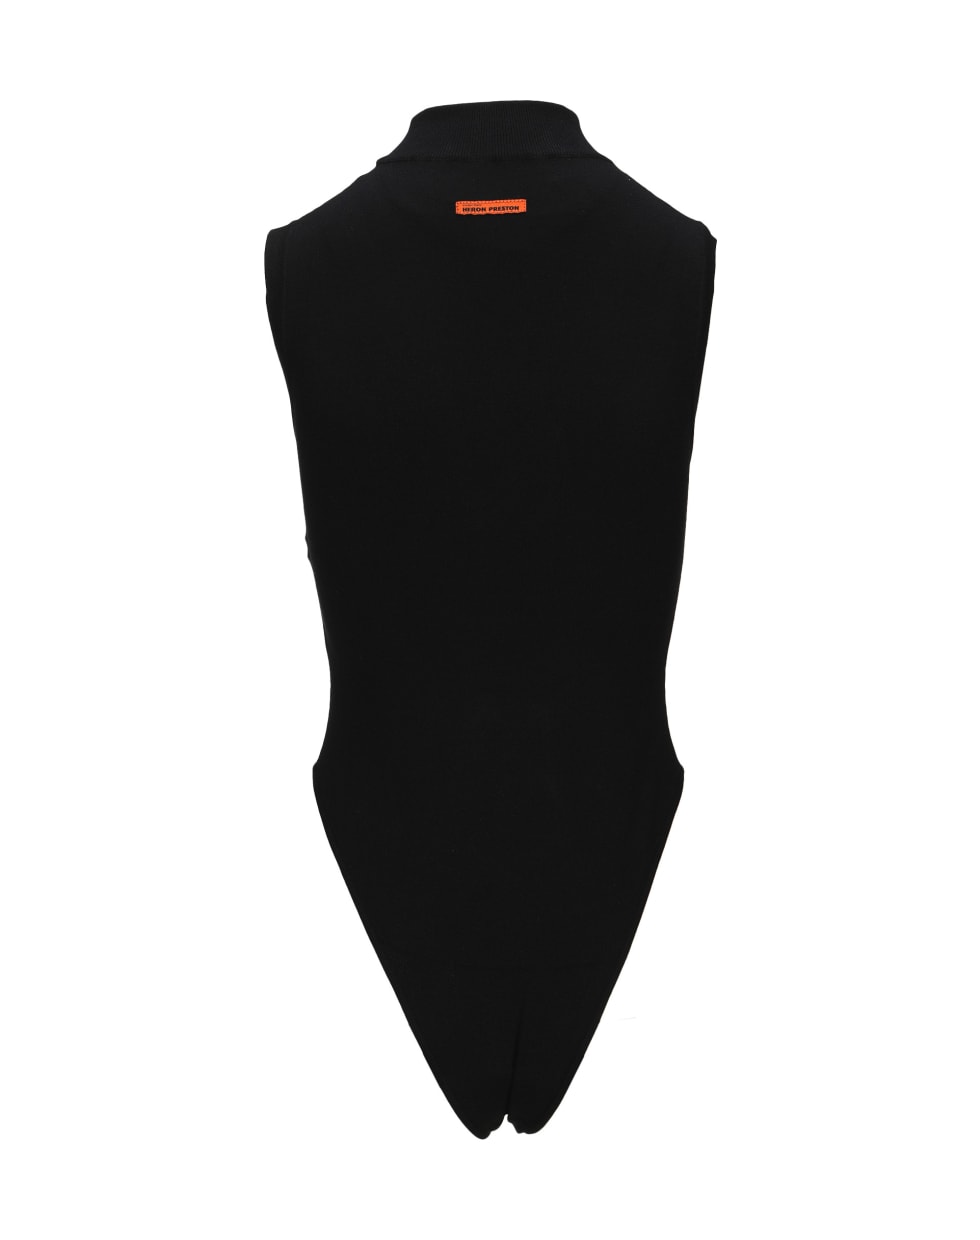 HERON PRESTON Logo Bodysuit - BLACK